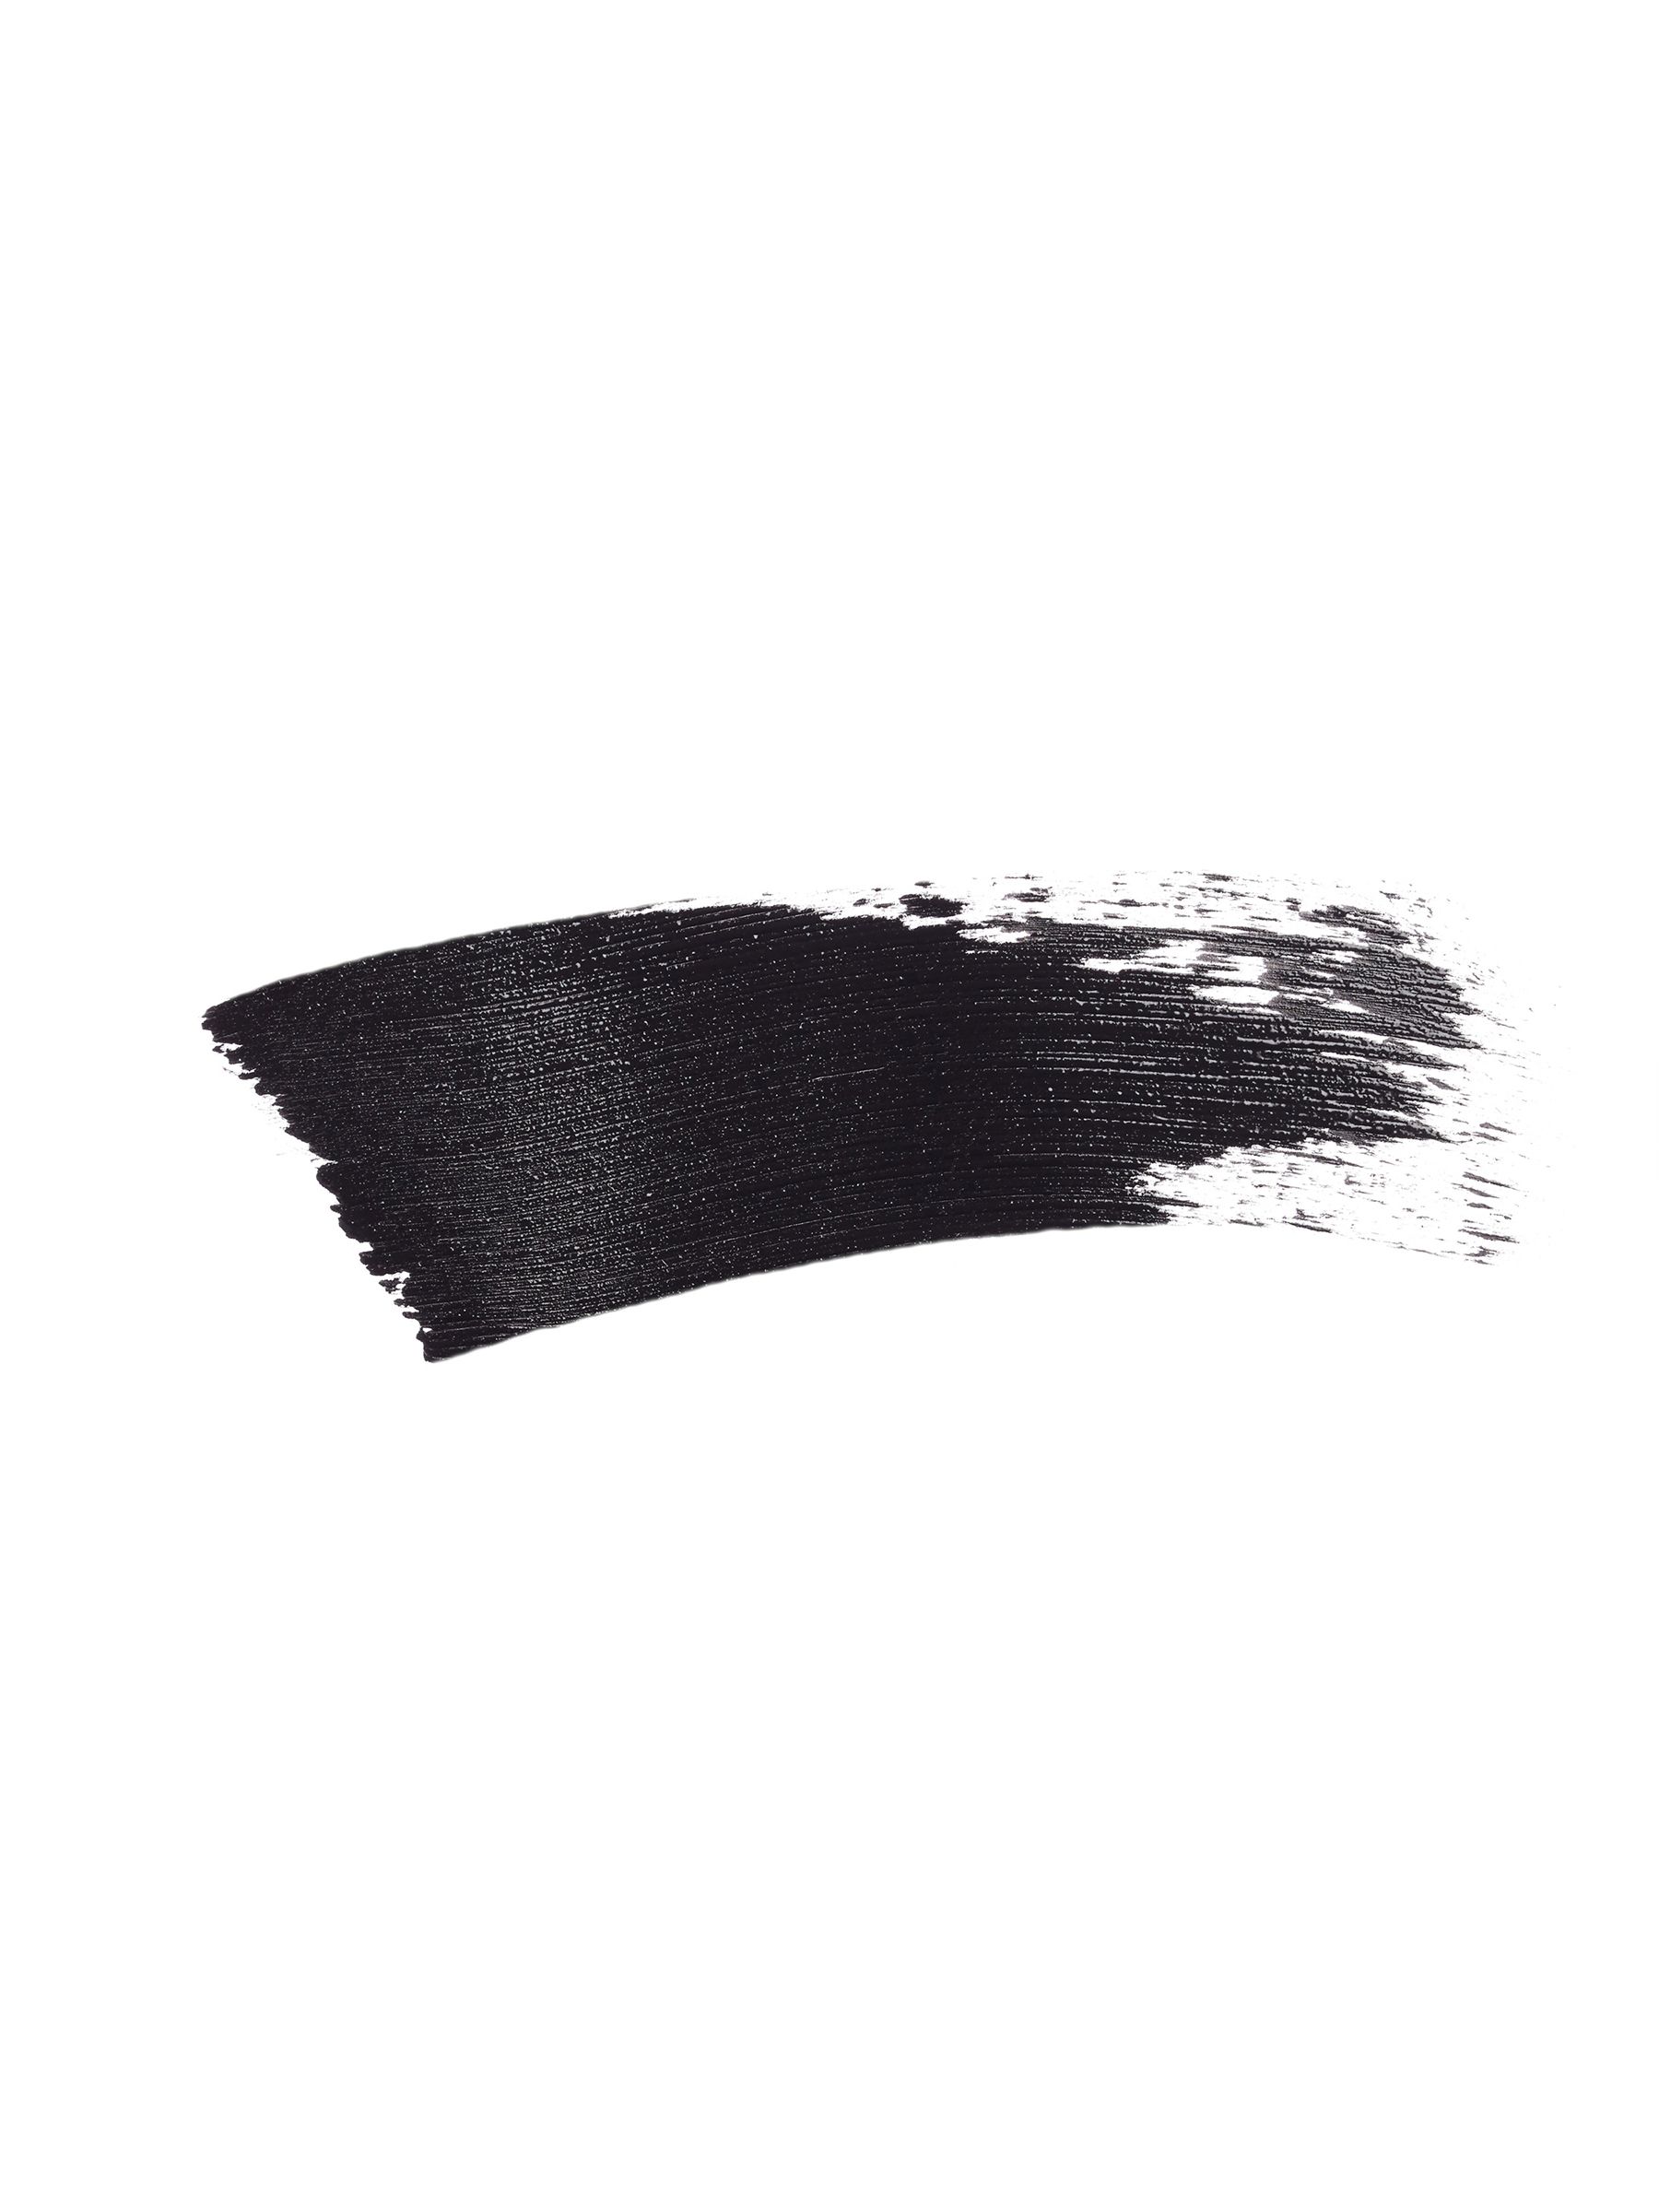 Sisley-Paris So Stretch Mascara, 1 Deep Black